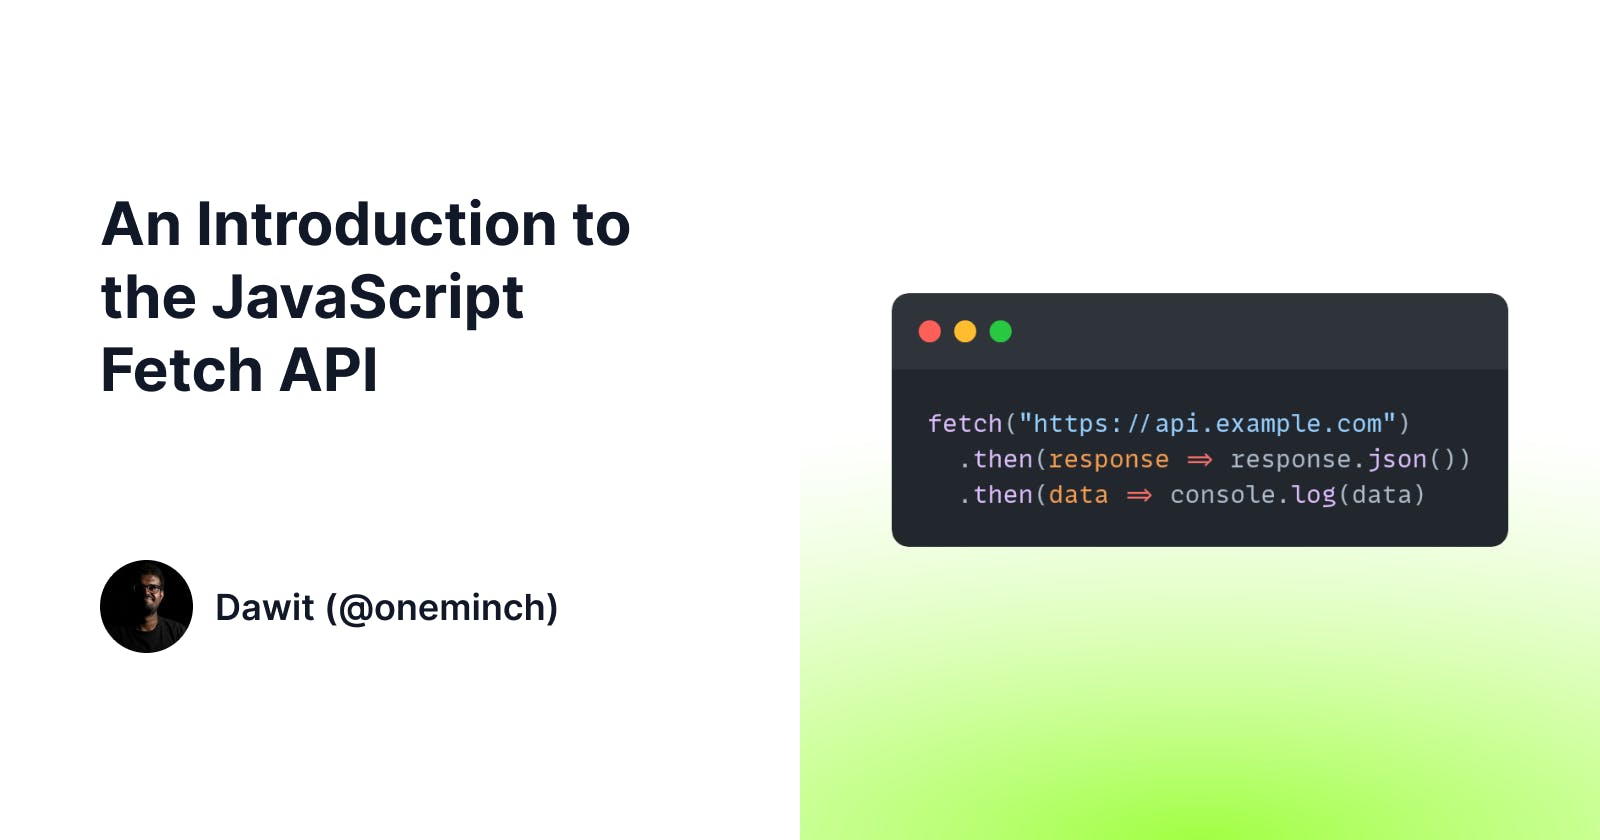 The JavaScript Fetch API